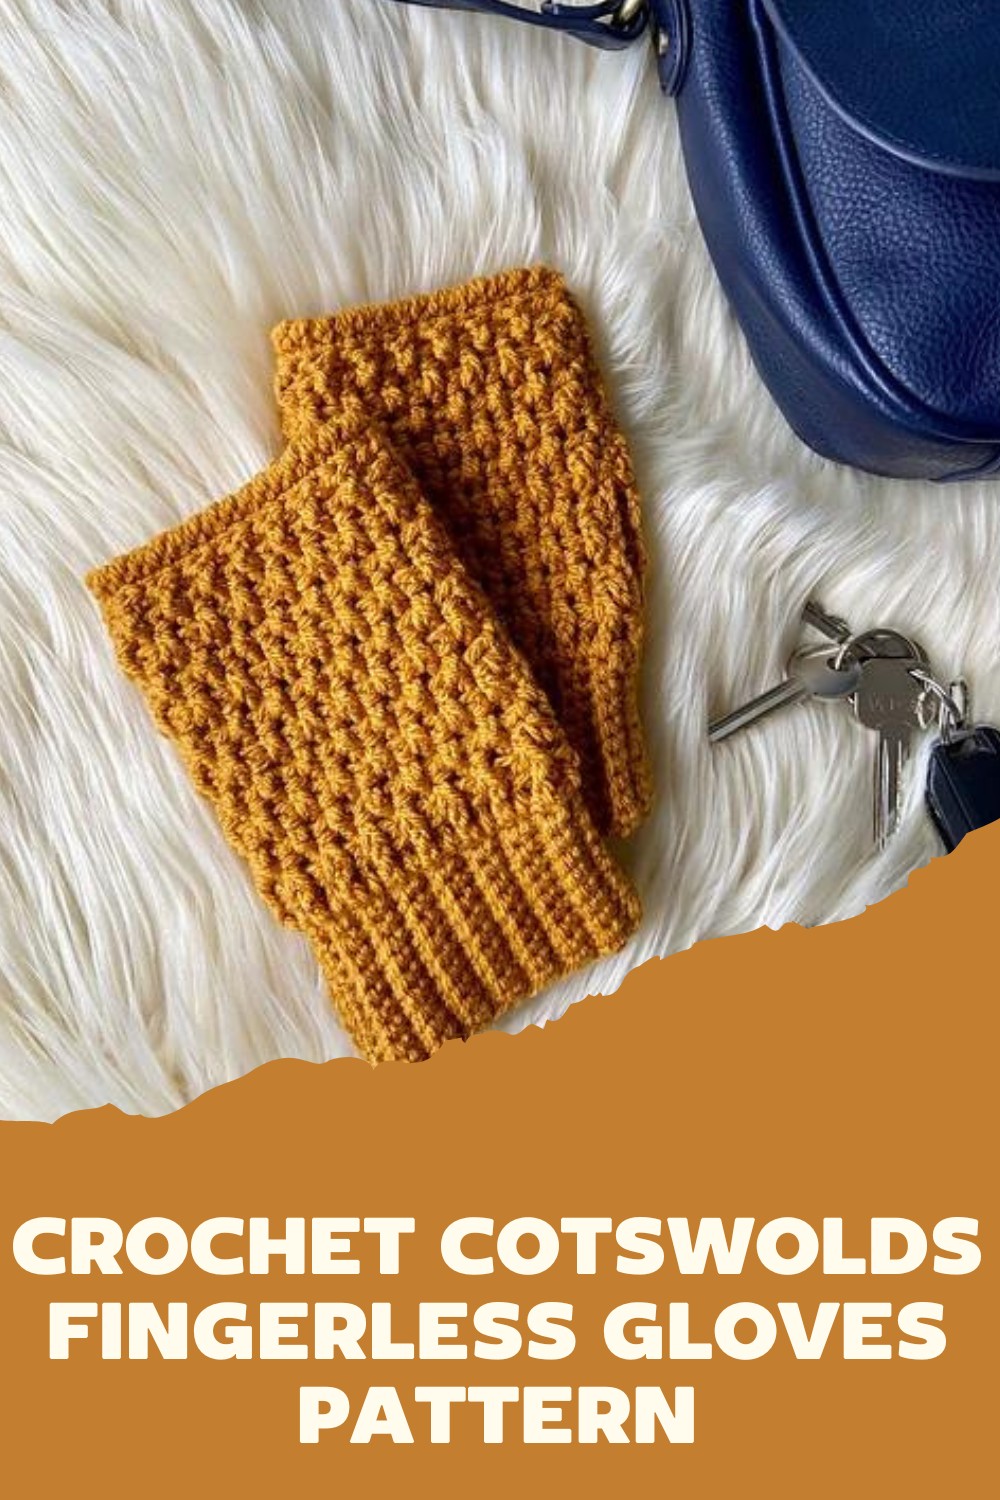 Crochet Cotswolds Fingerless Gloves Pattern